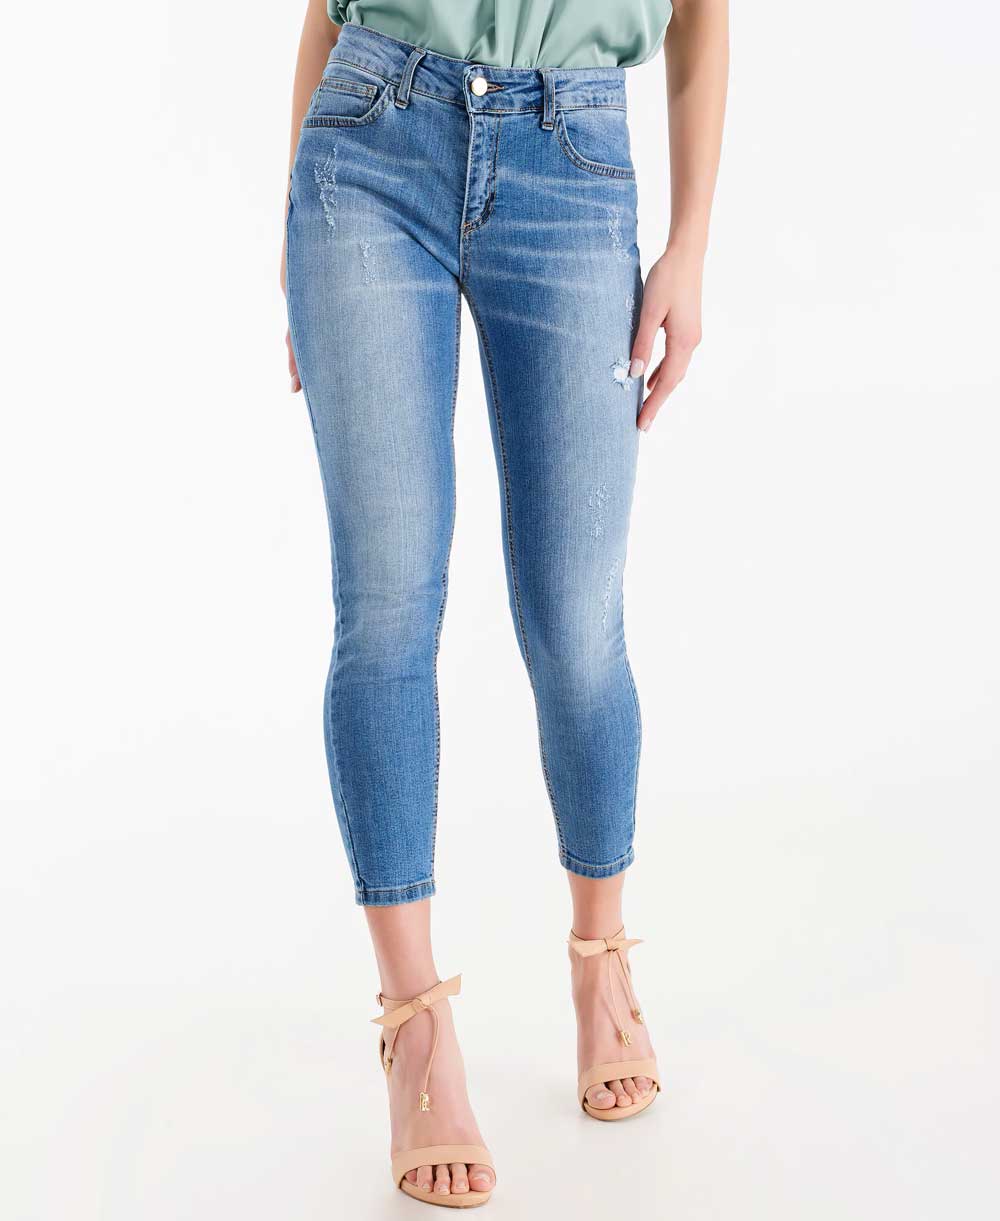 jeans rinascimento estate 2021